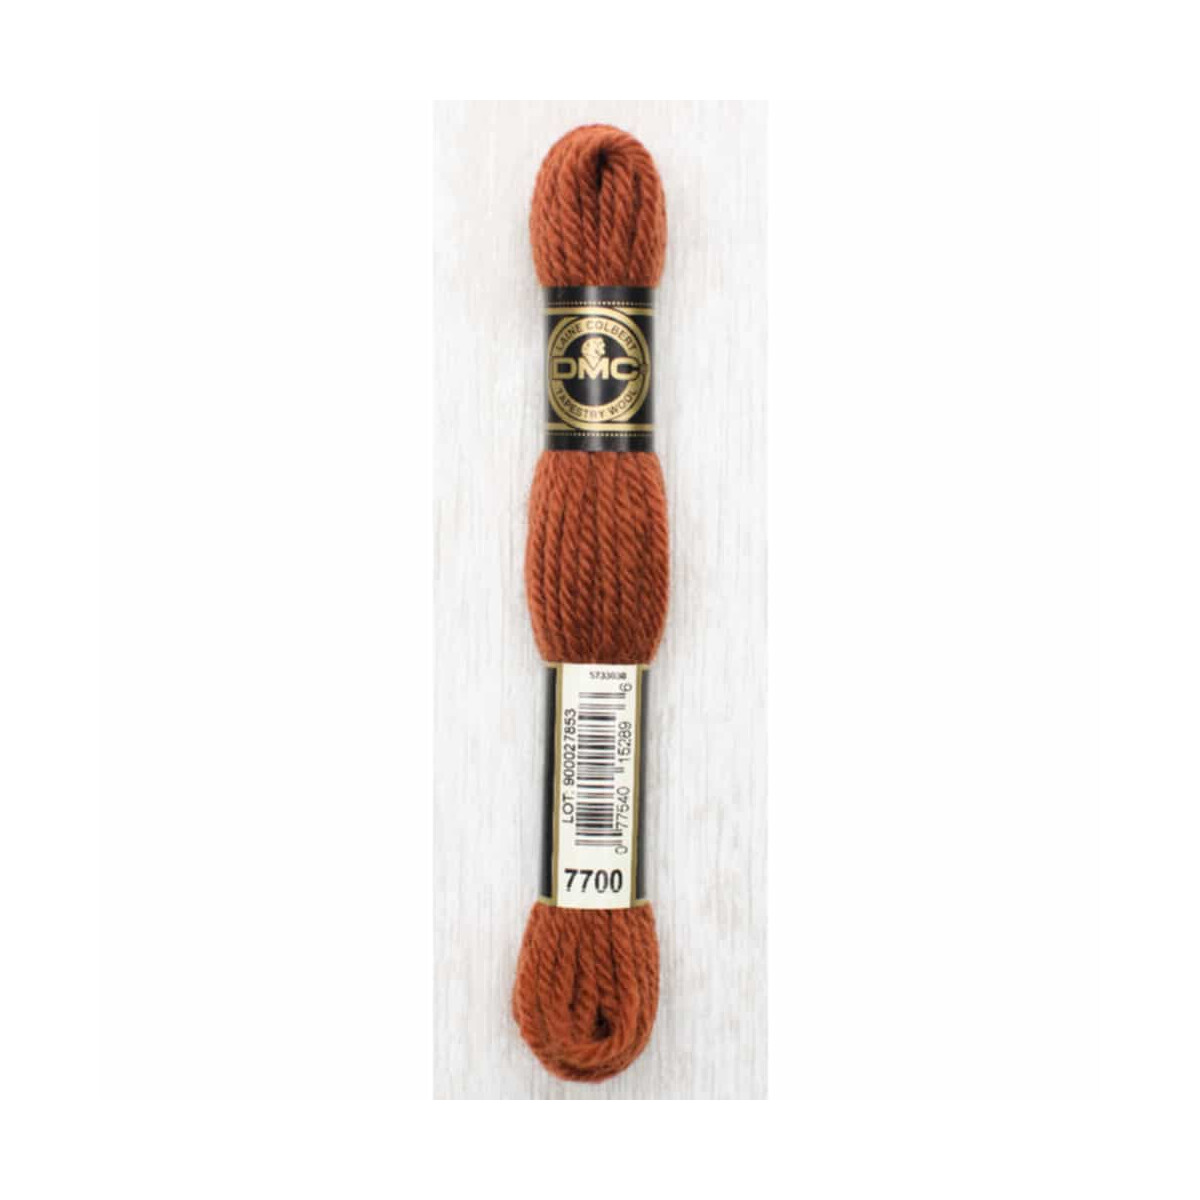 DMC Laine Colbert wool, 8m, 486-7700